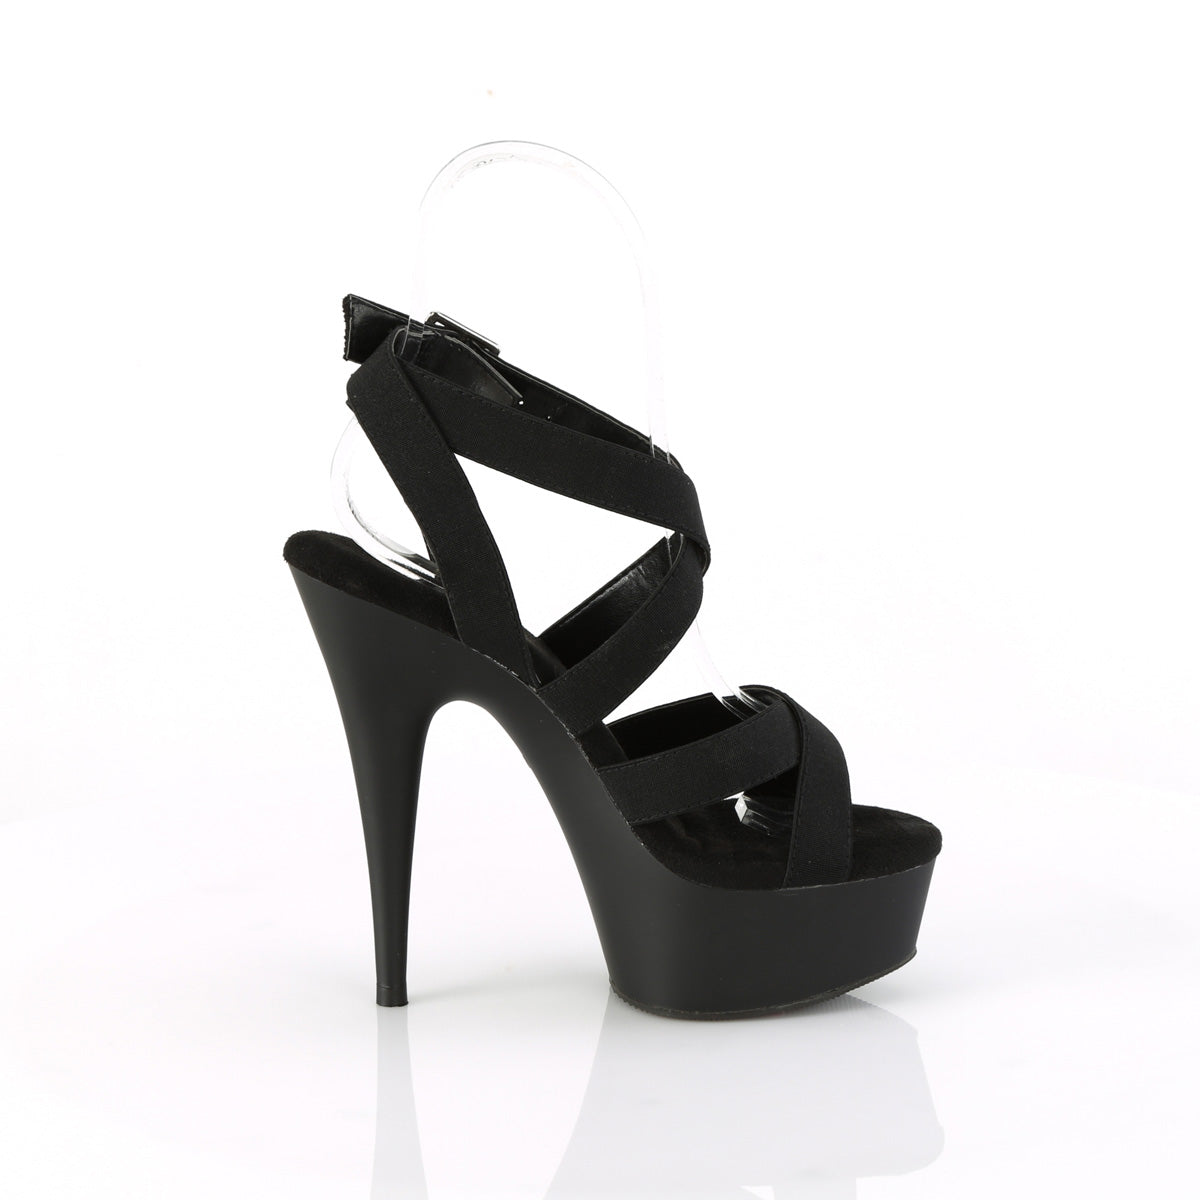 DELIGHT-638 Black Ankle Sandal High Heel